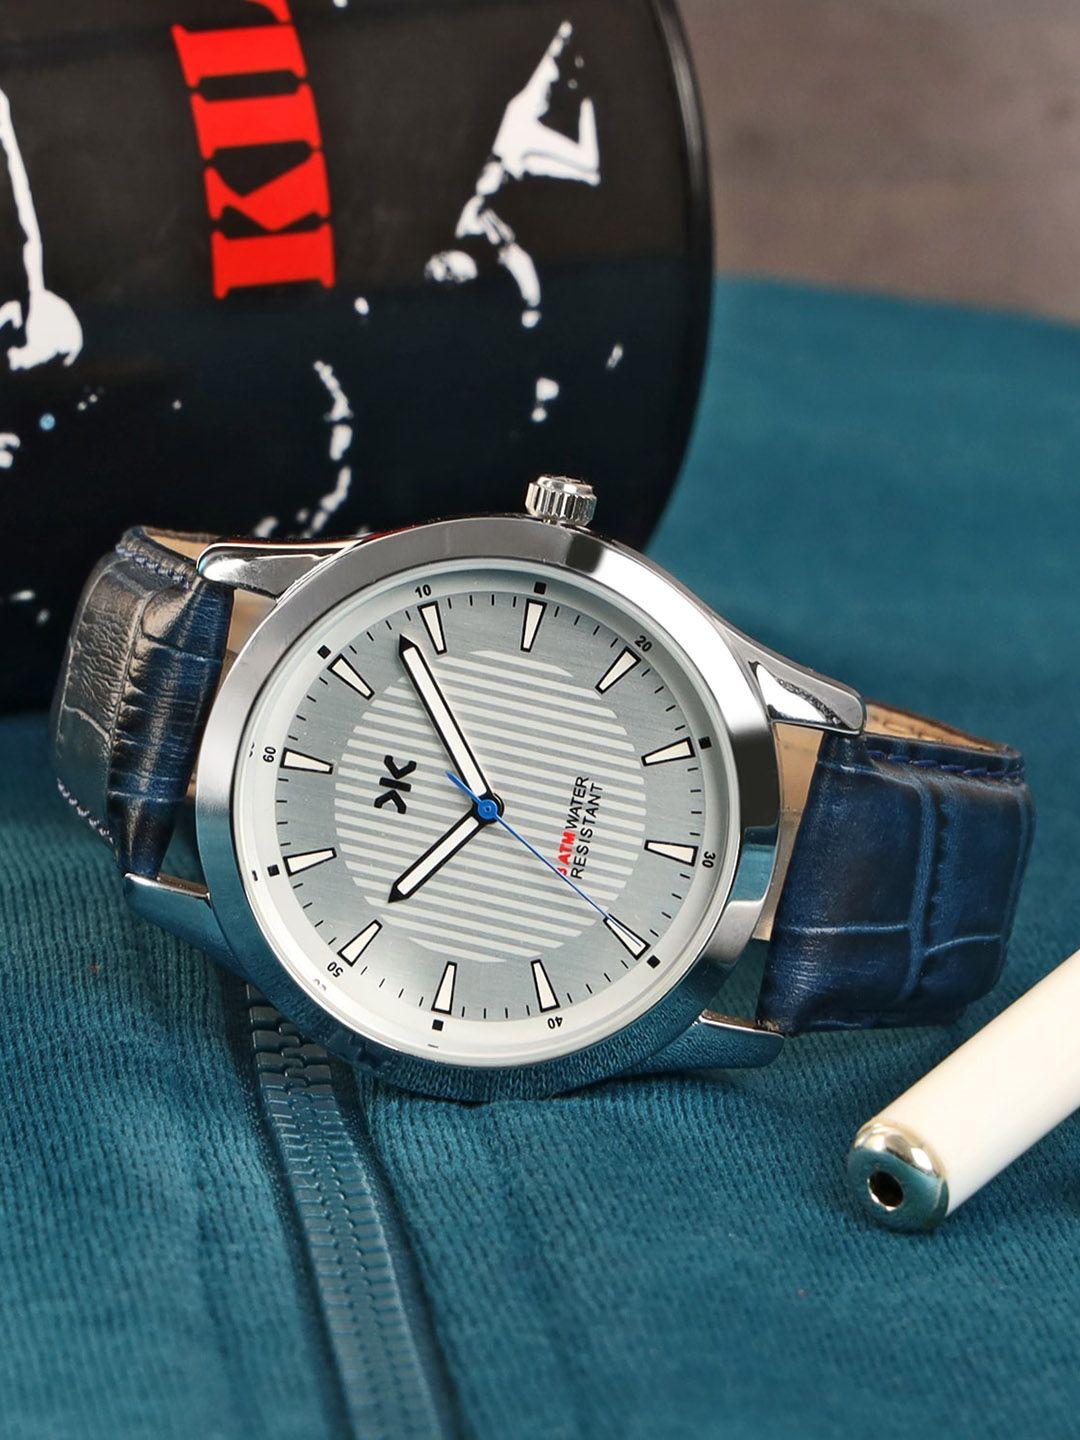 killer men brass patterned dial & leather bracelet style straps analogue watch klmo43c